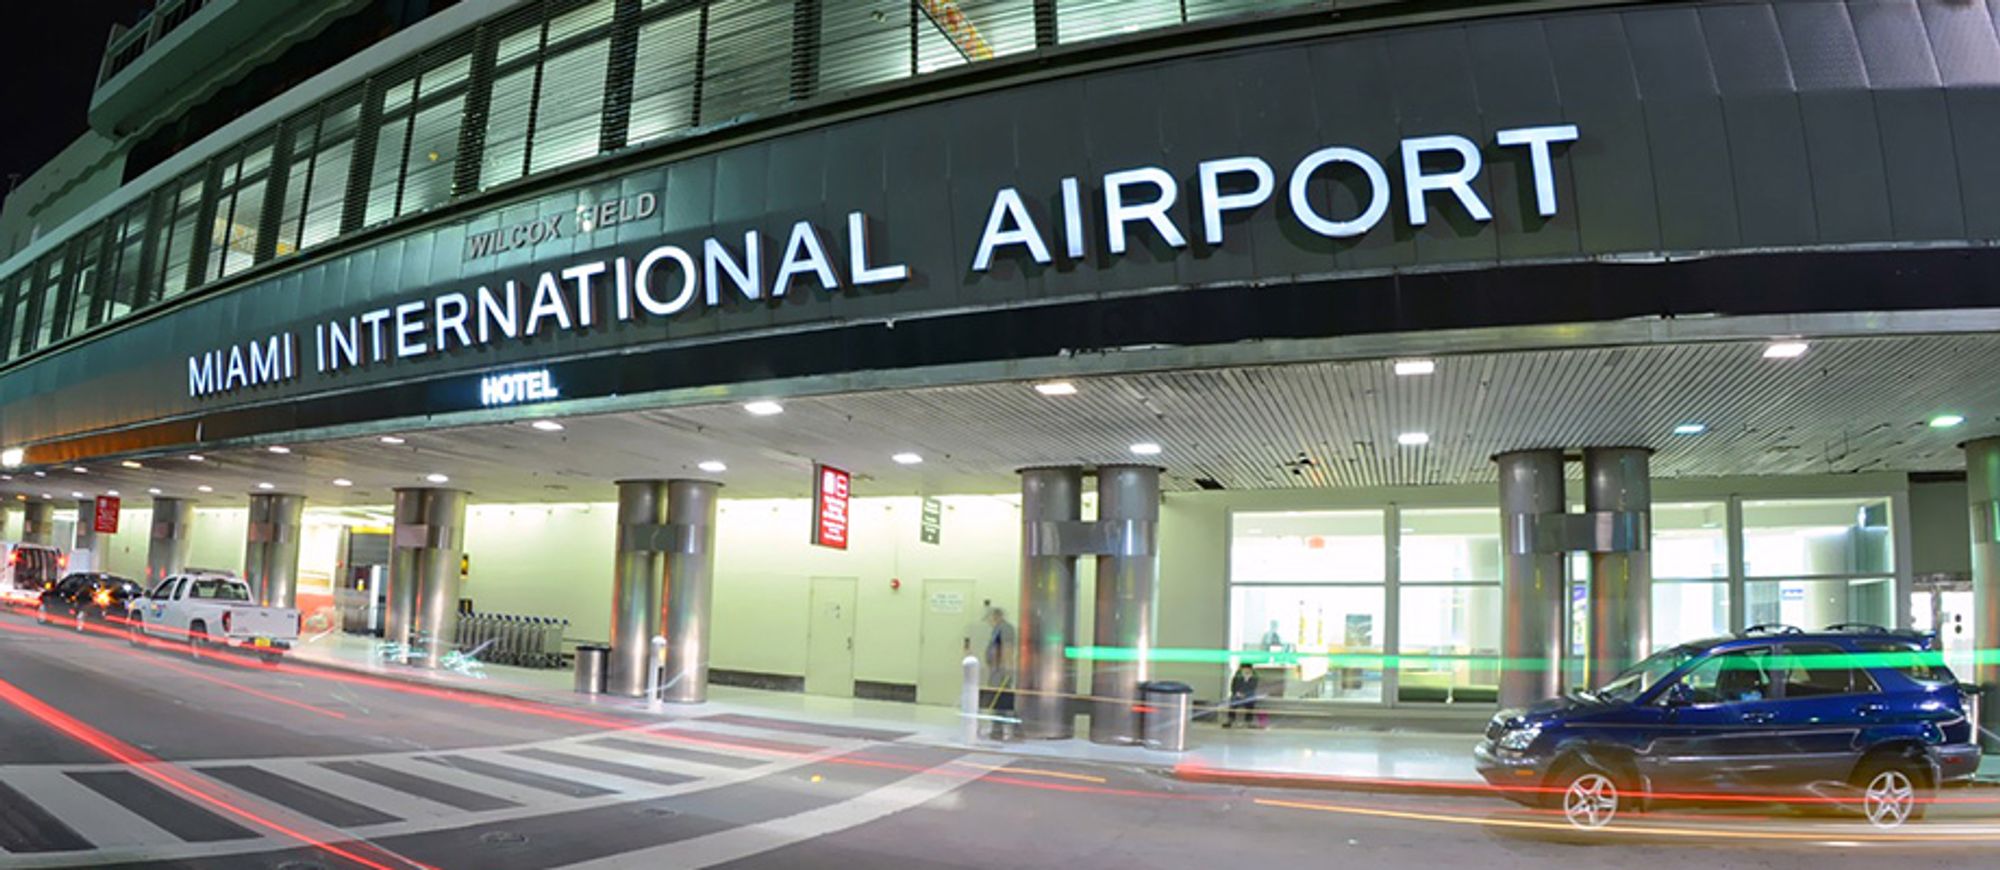 Miami International Airport (MIA)         (マイアミ) (Japanese)